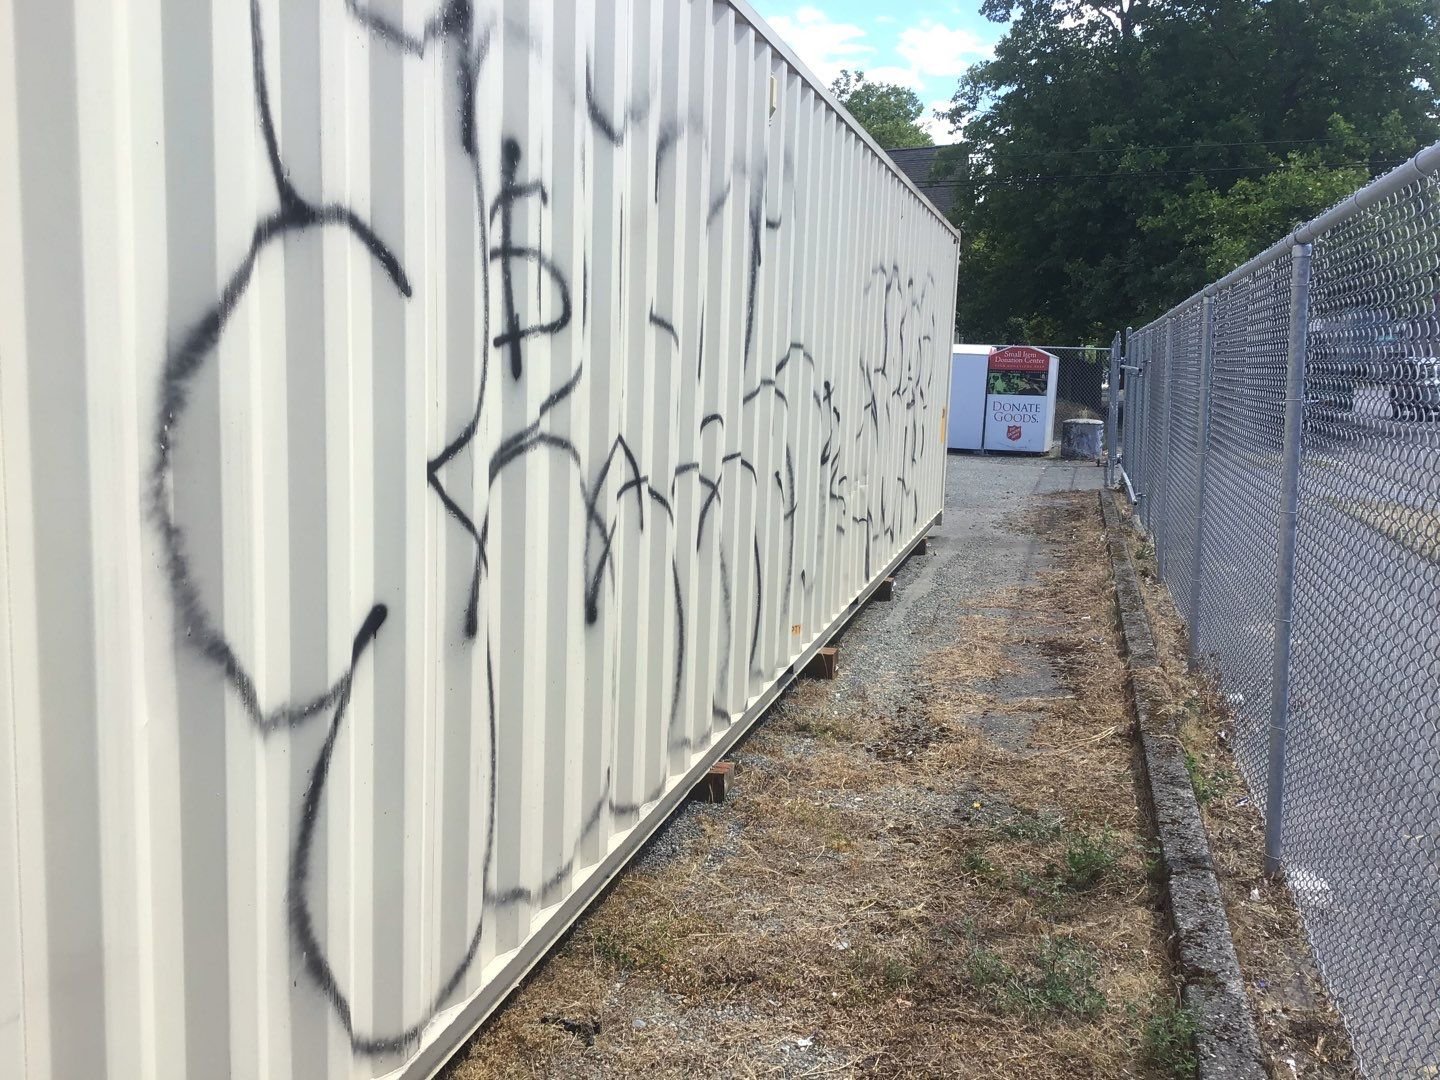 graffiti-removal-service-Tacoma-on-metal.jpg